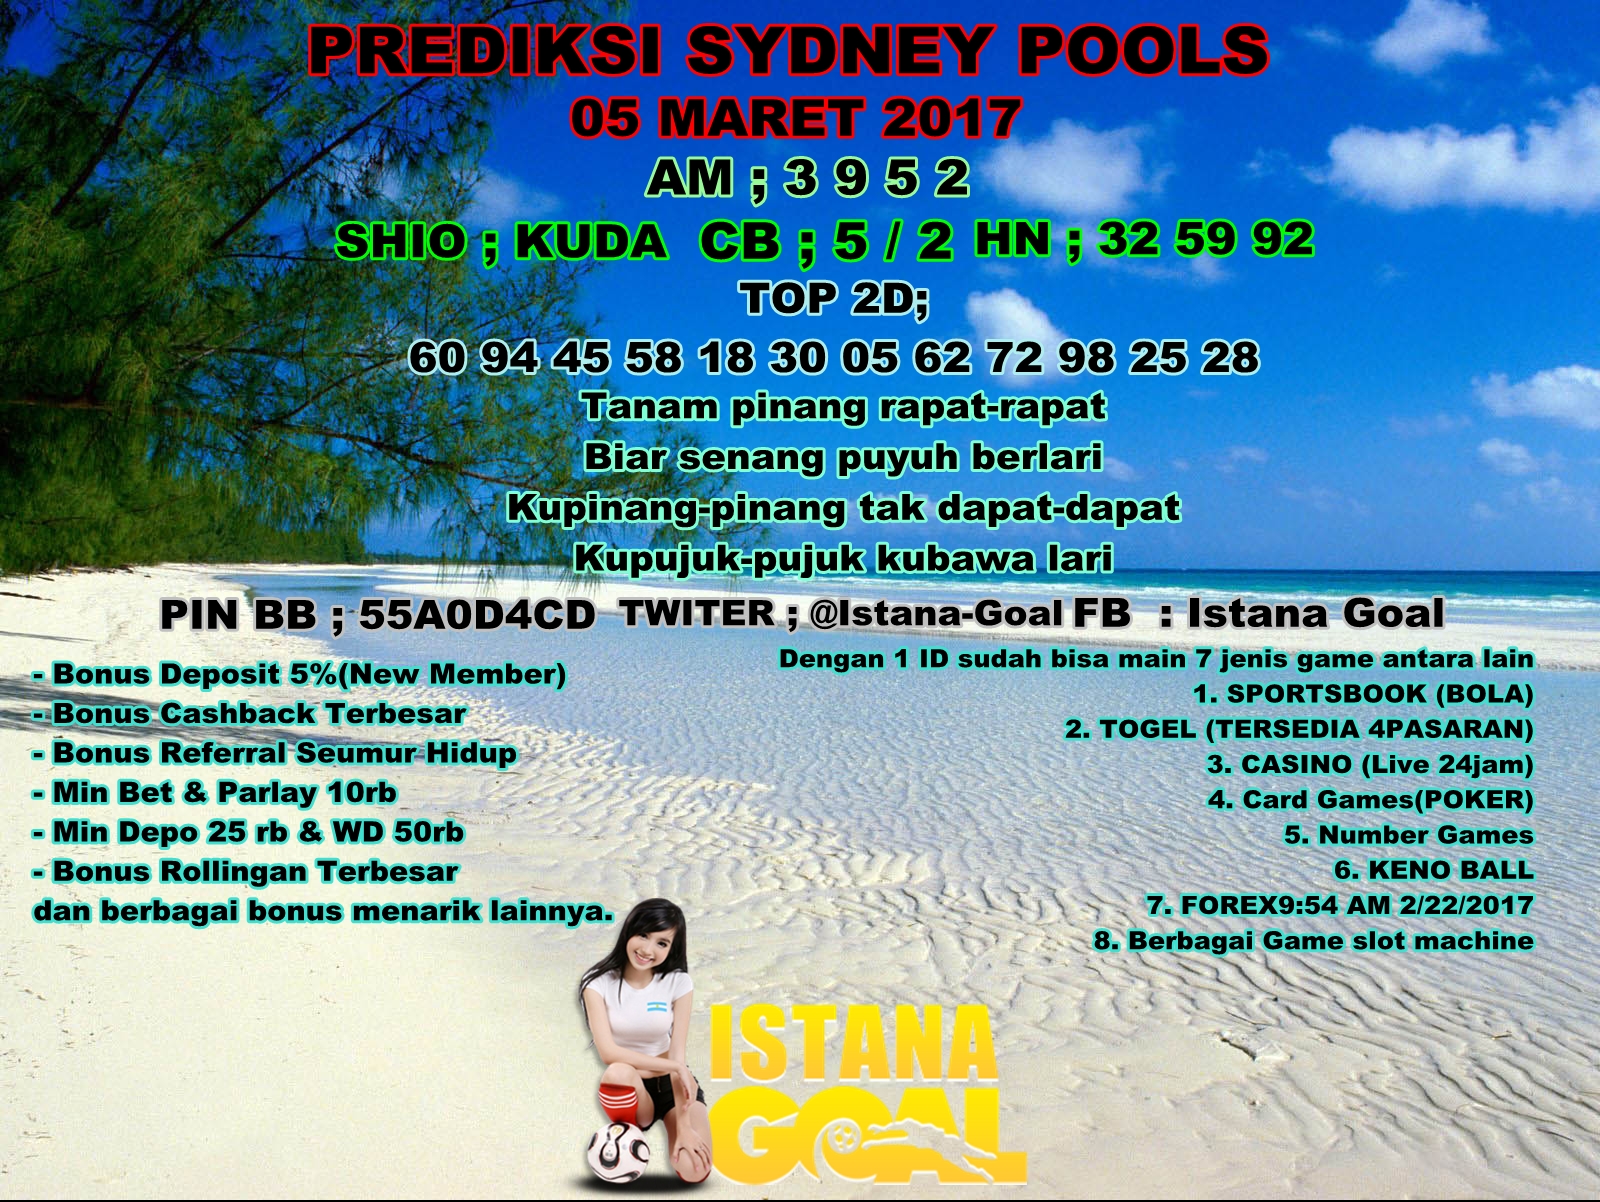 19 Sydney pools prediksi terbaik